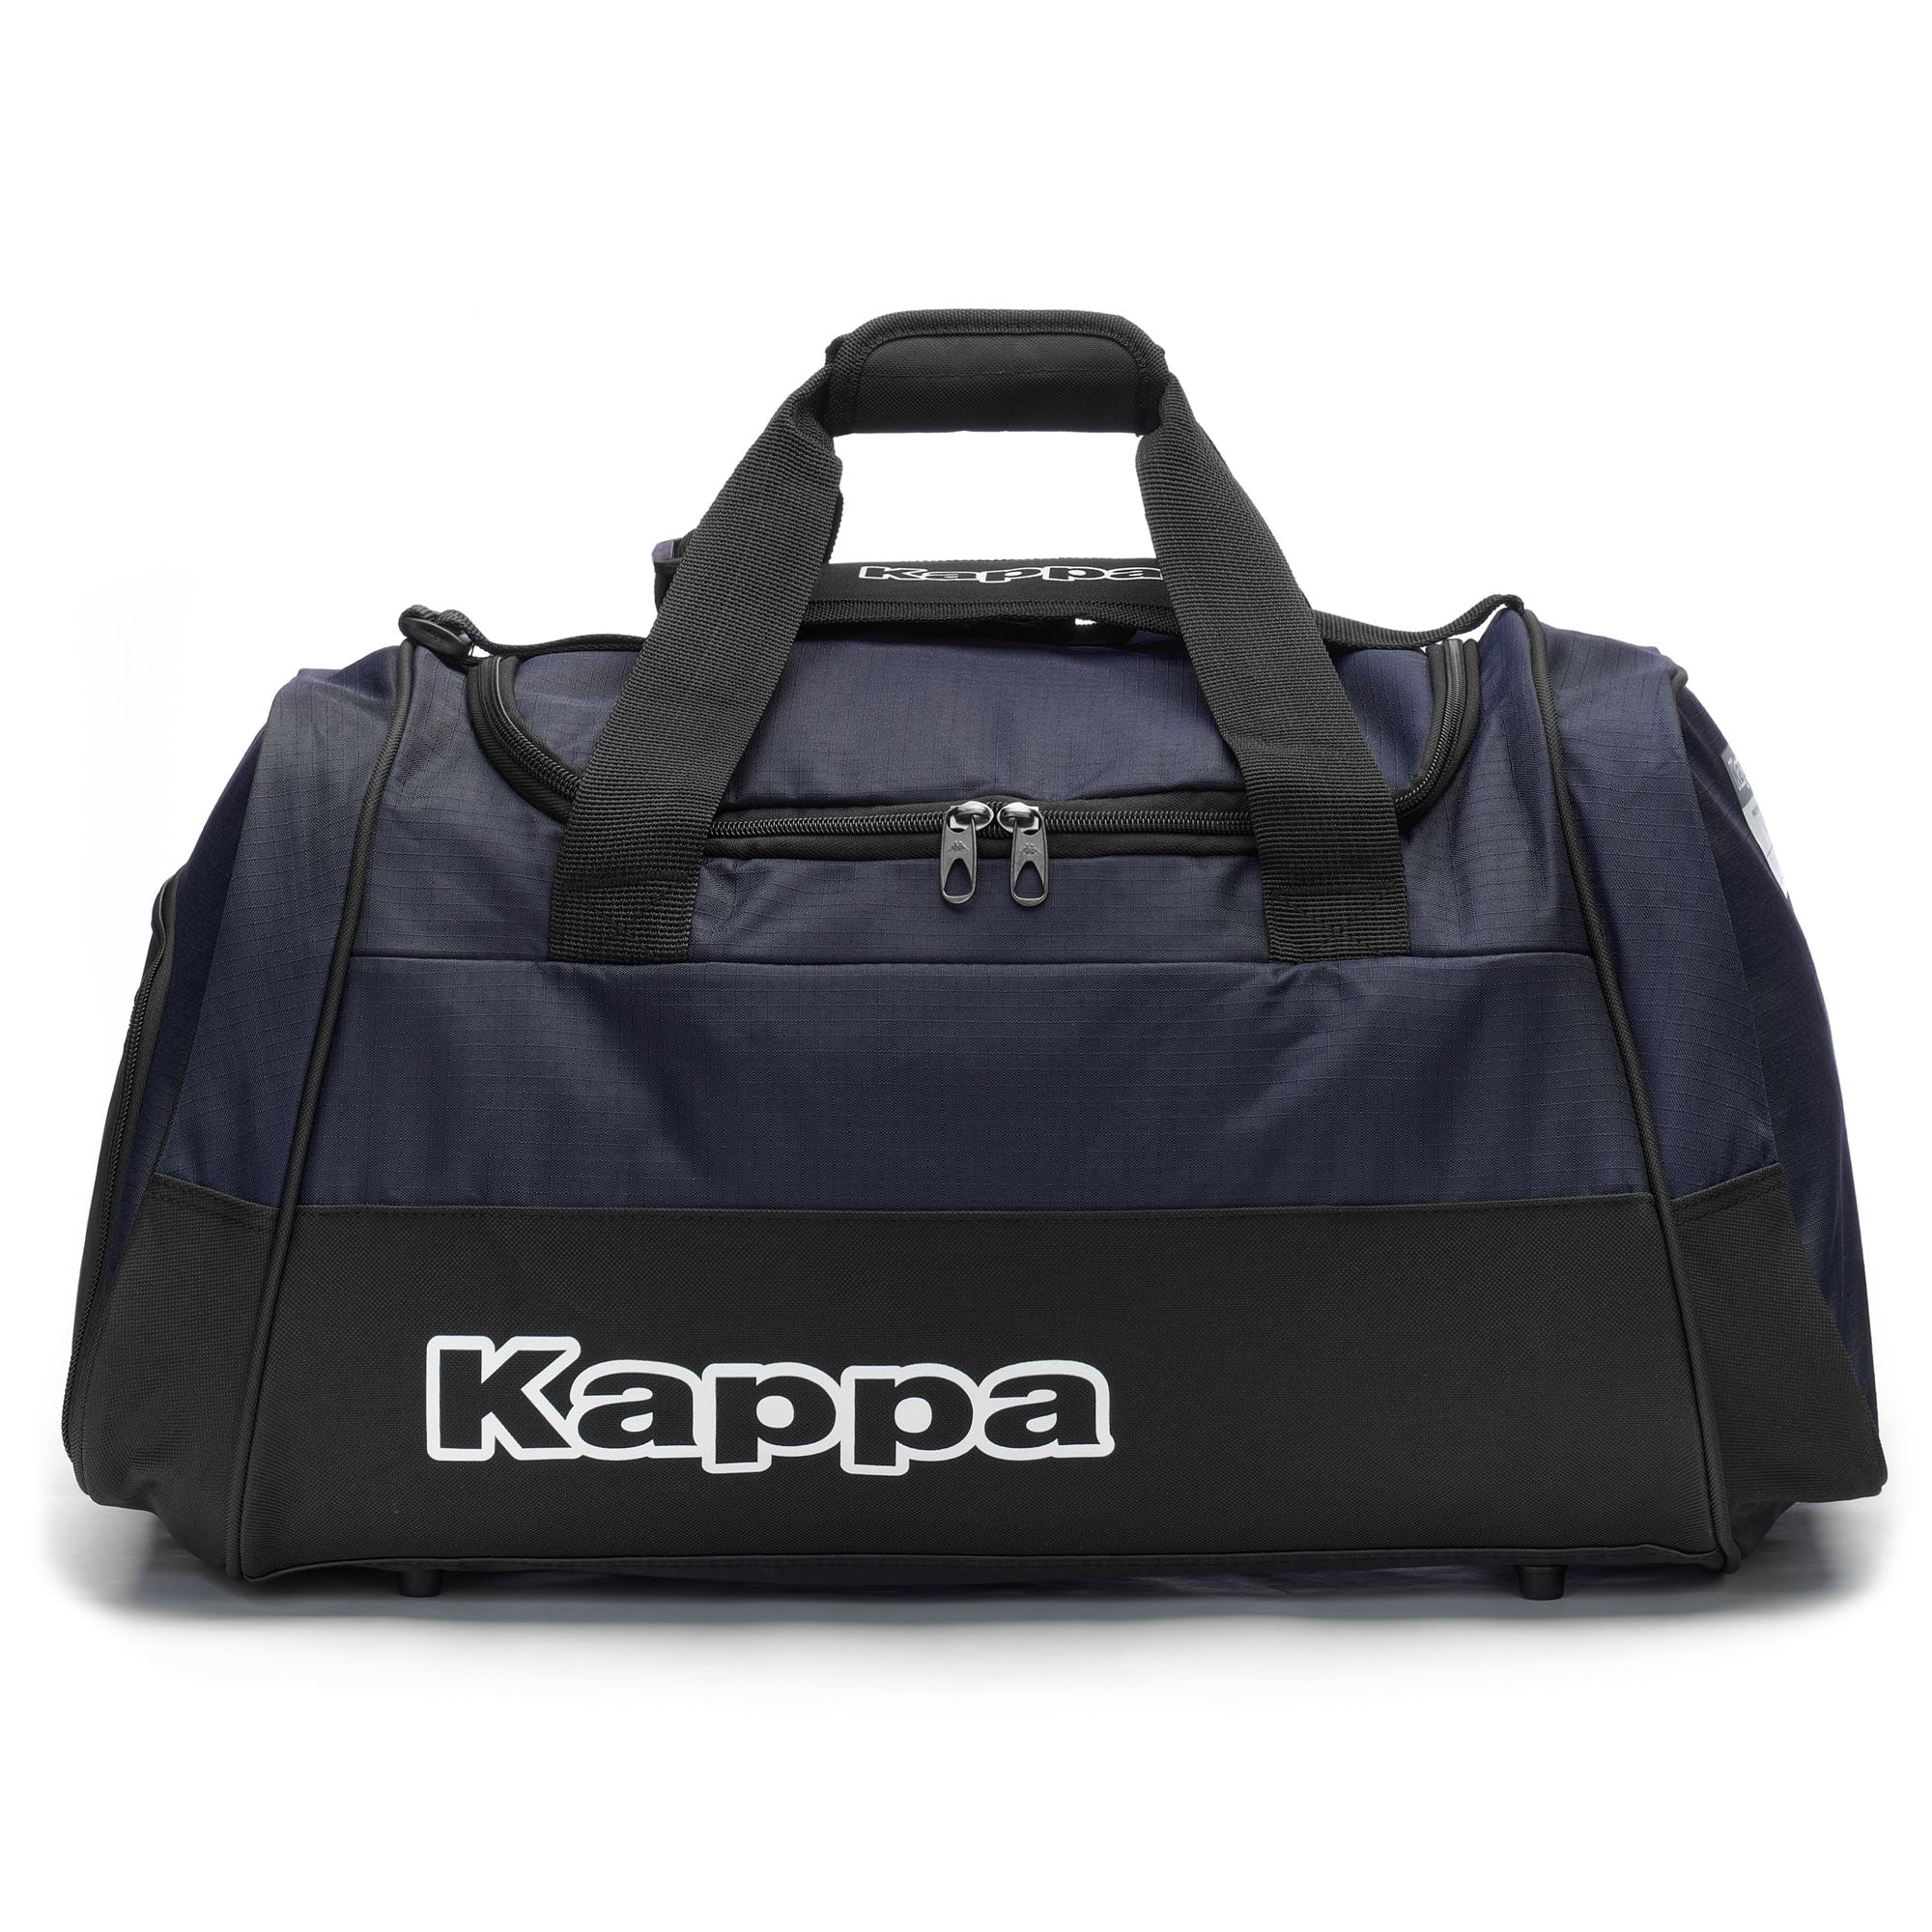 Soccer accessories – Kappa.com